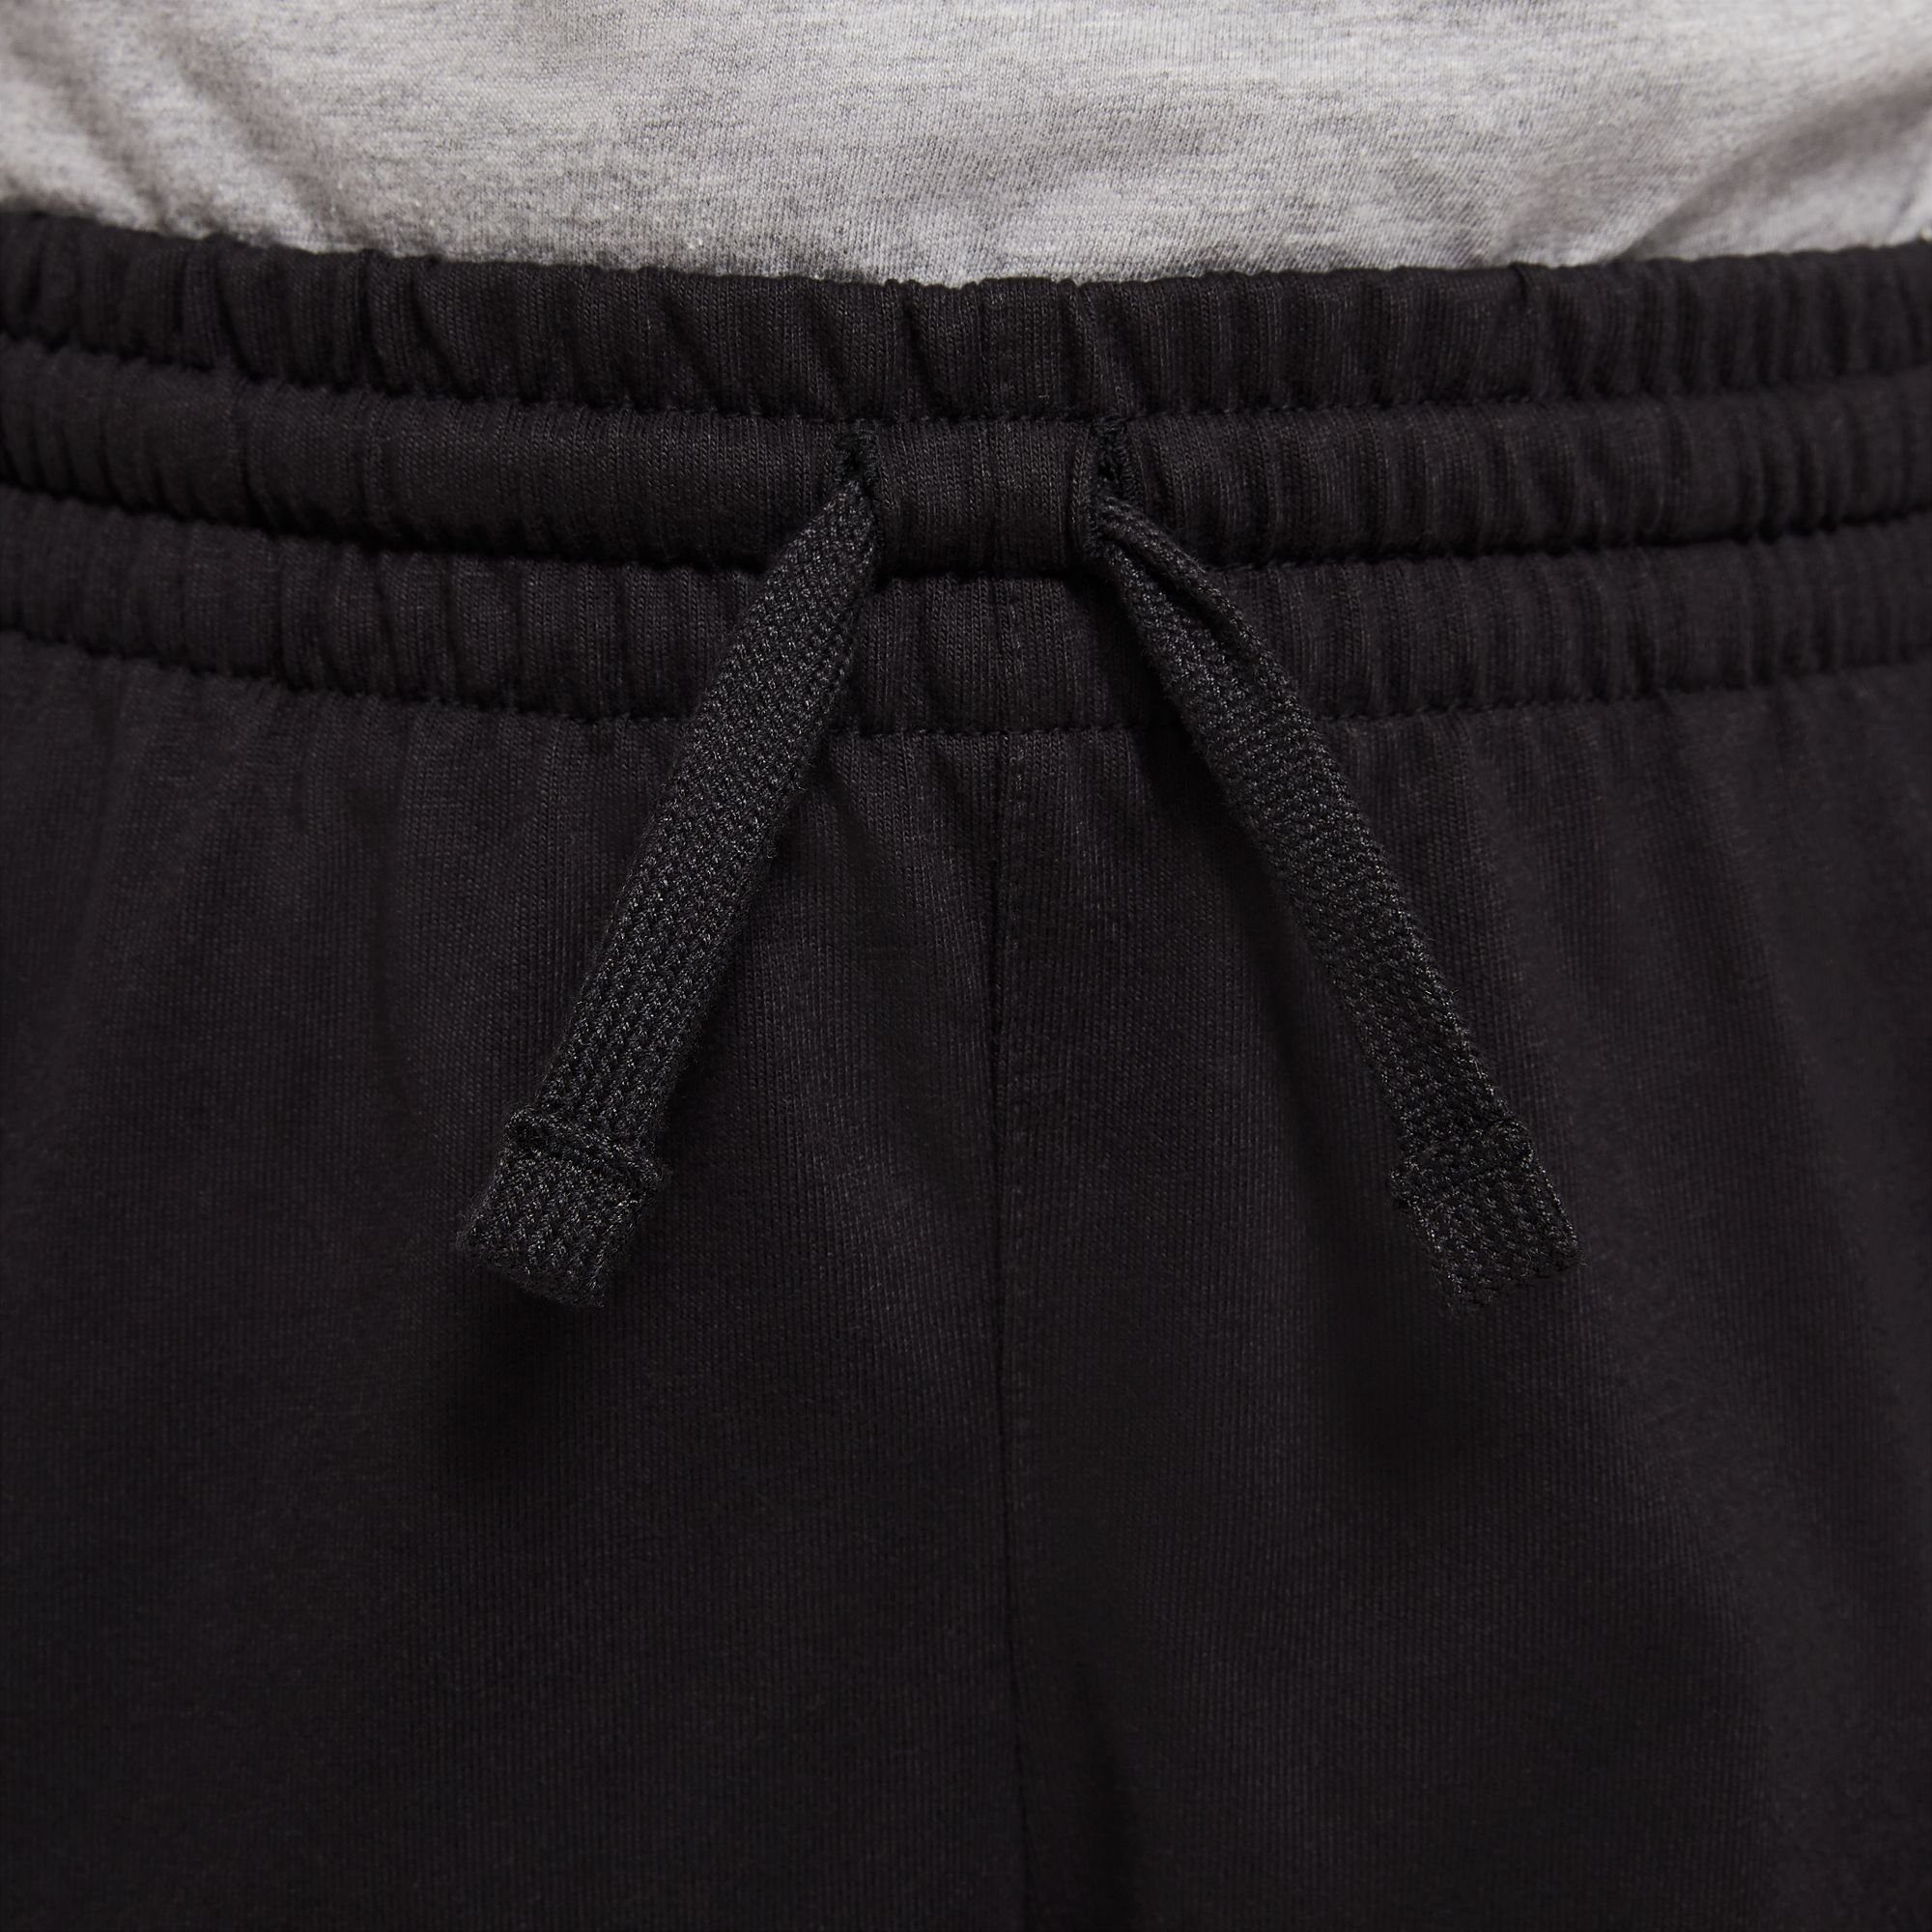 (BOYS) SHORTS BIG schwarz JERSEY Sportswear Shorts Nike KIDS'